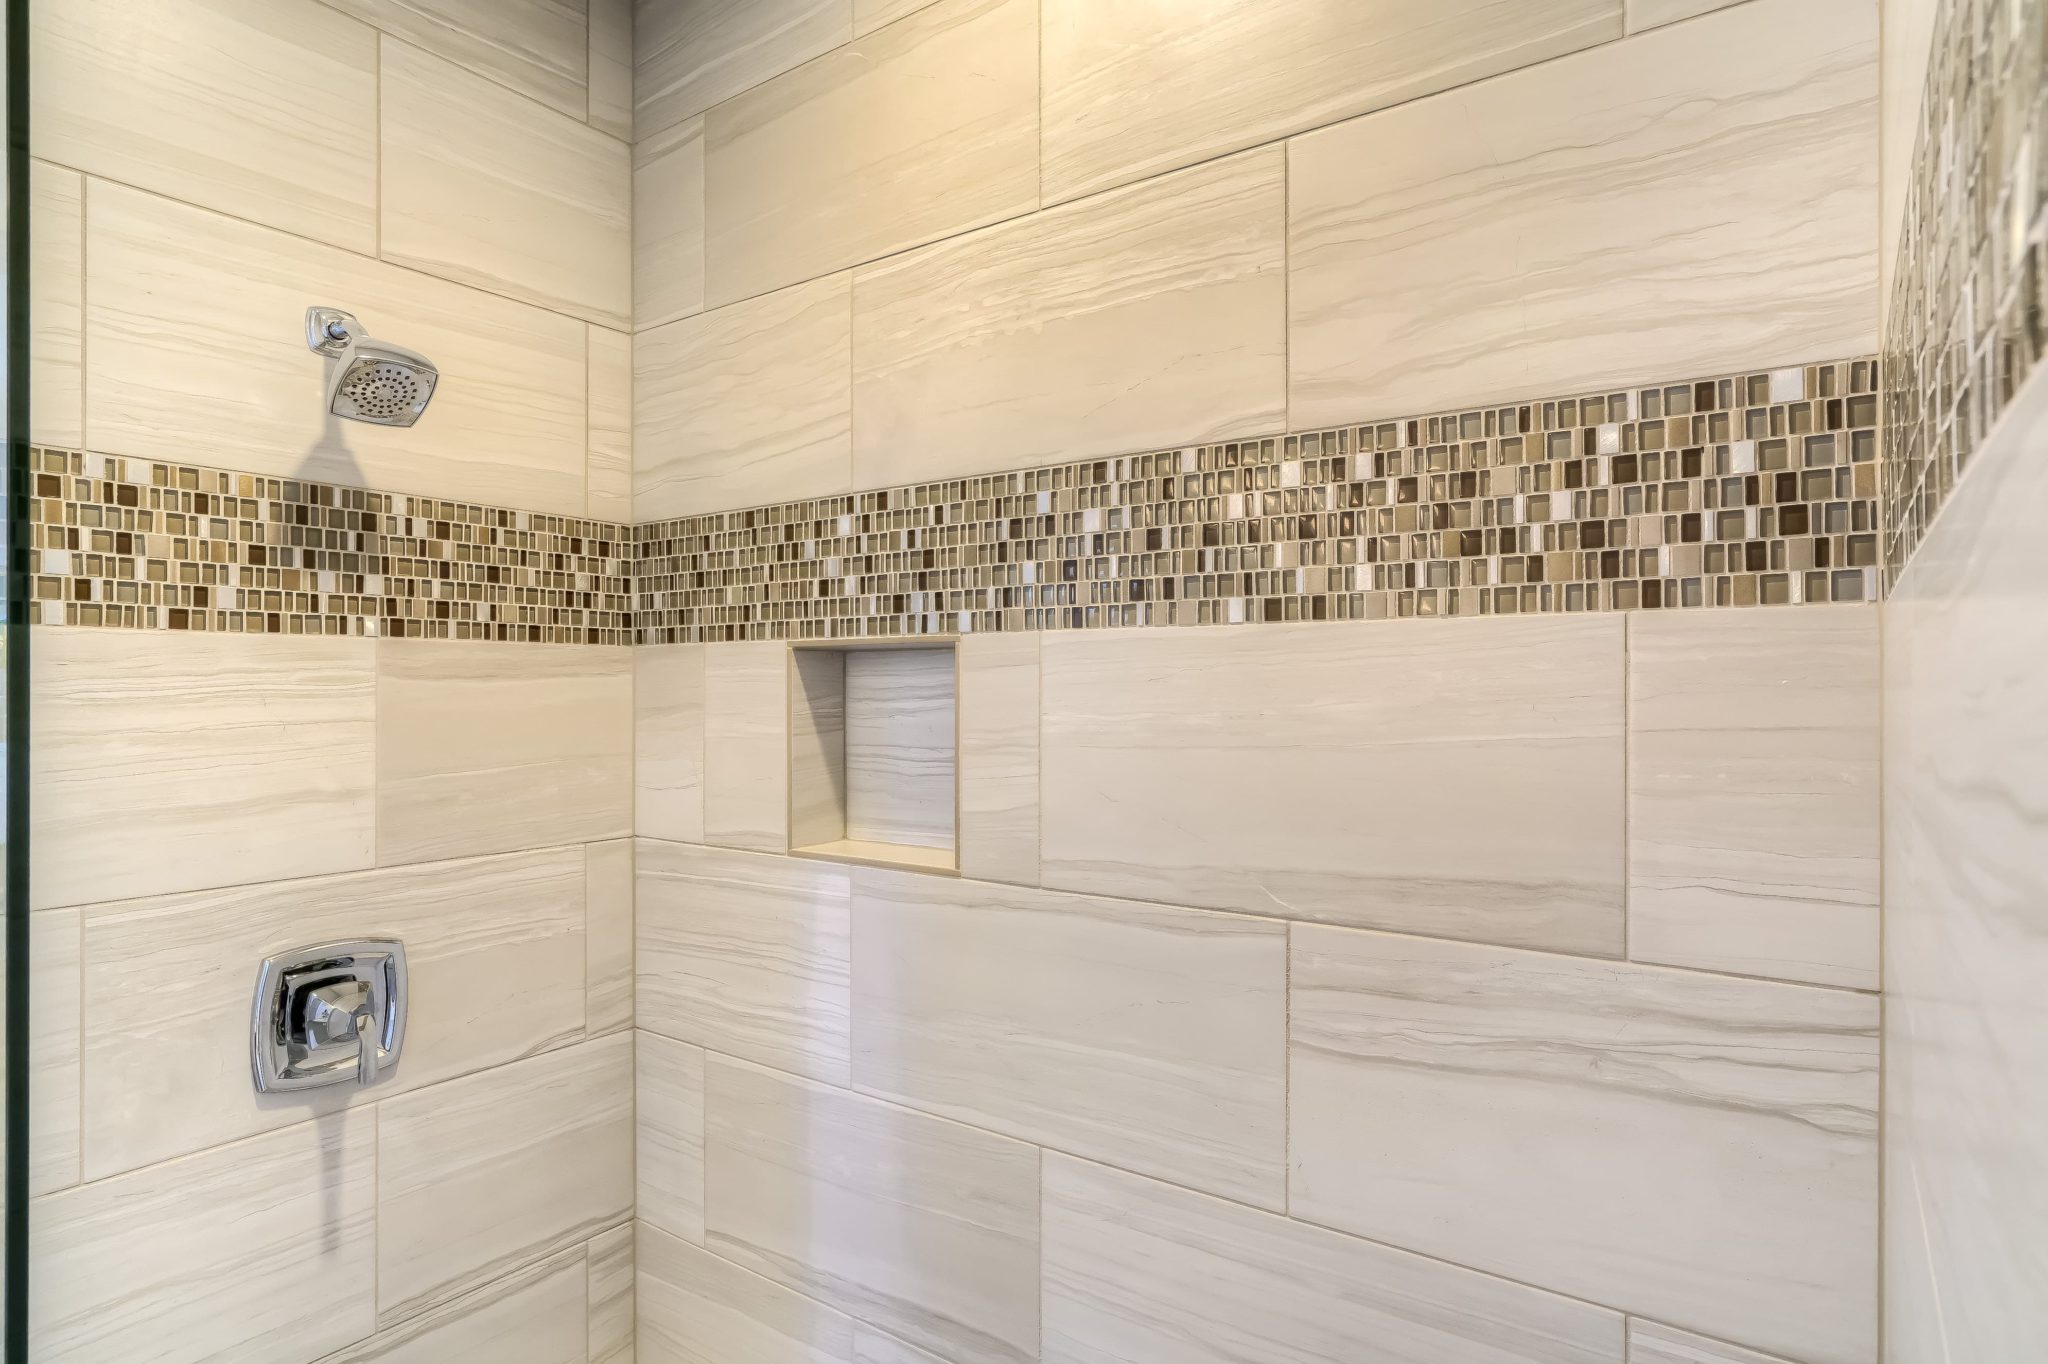 2017 Tour Homes bathroom area view tile shower area